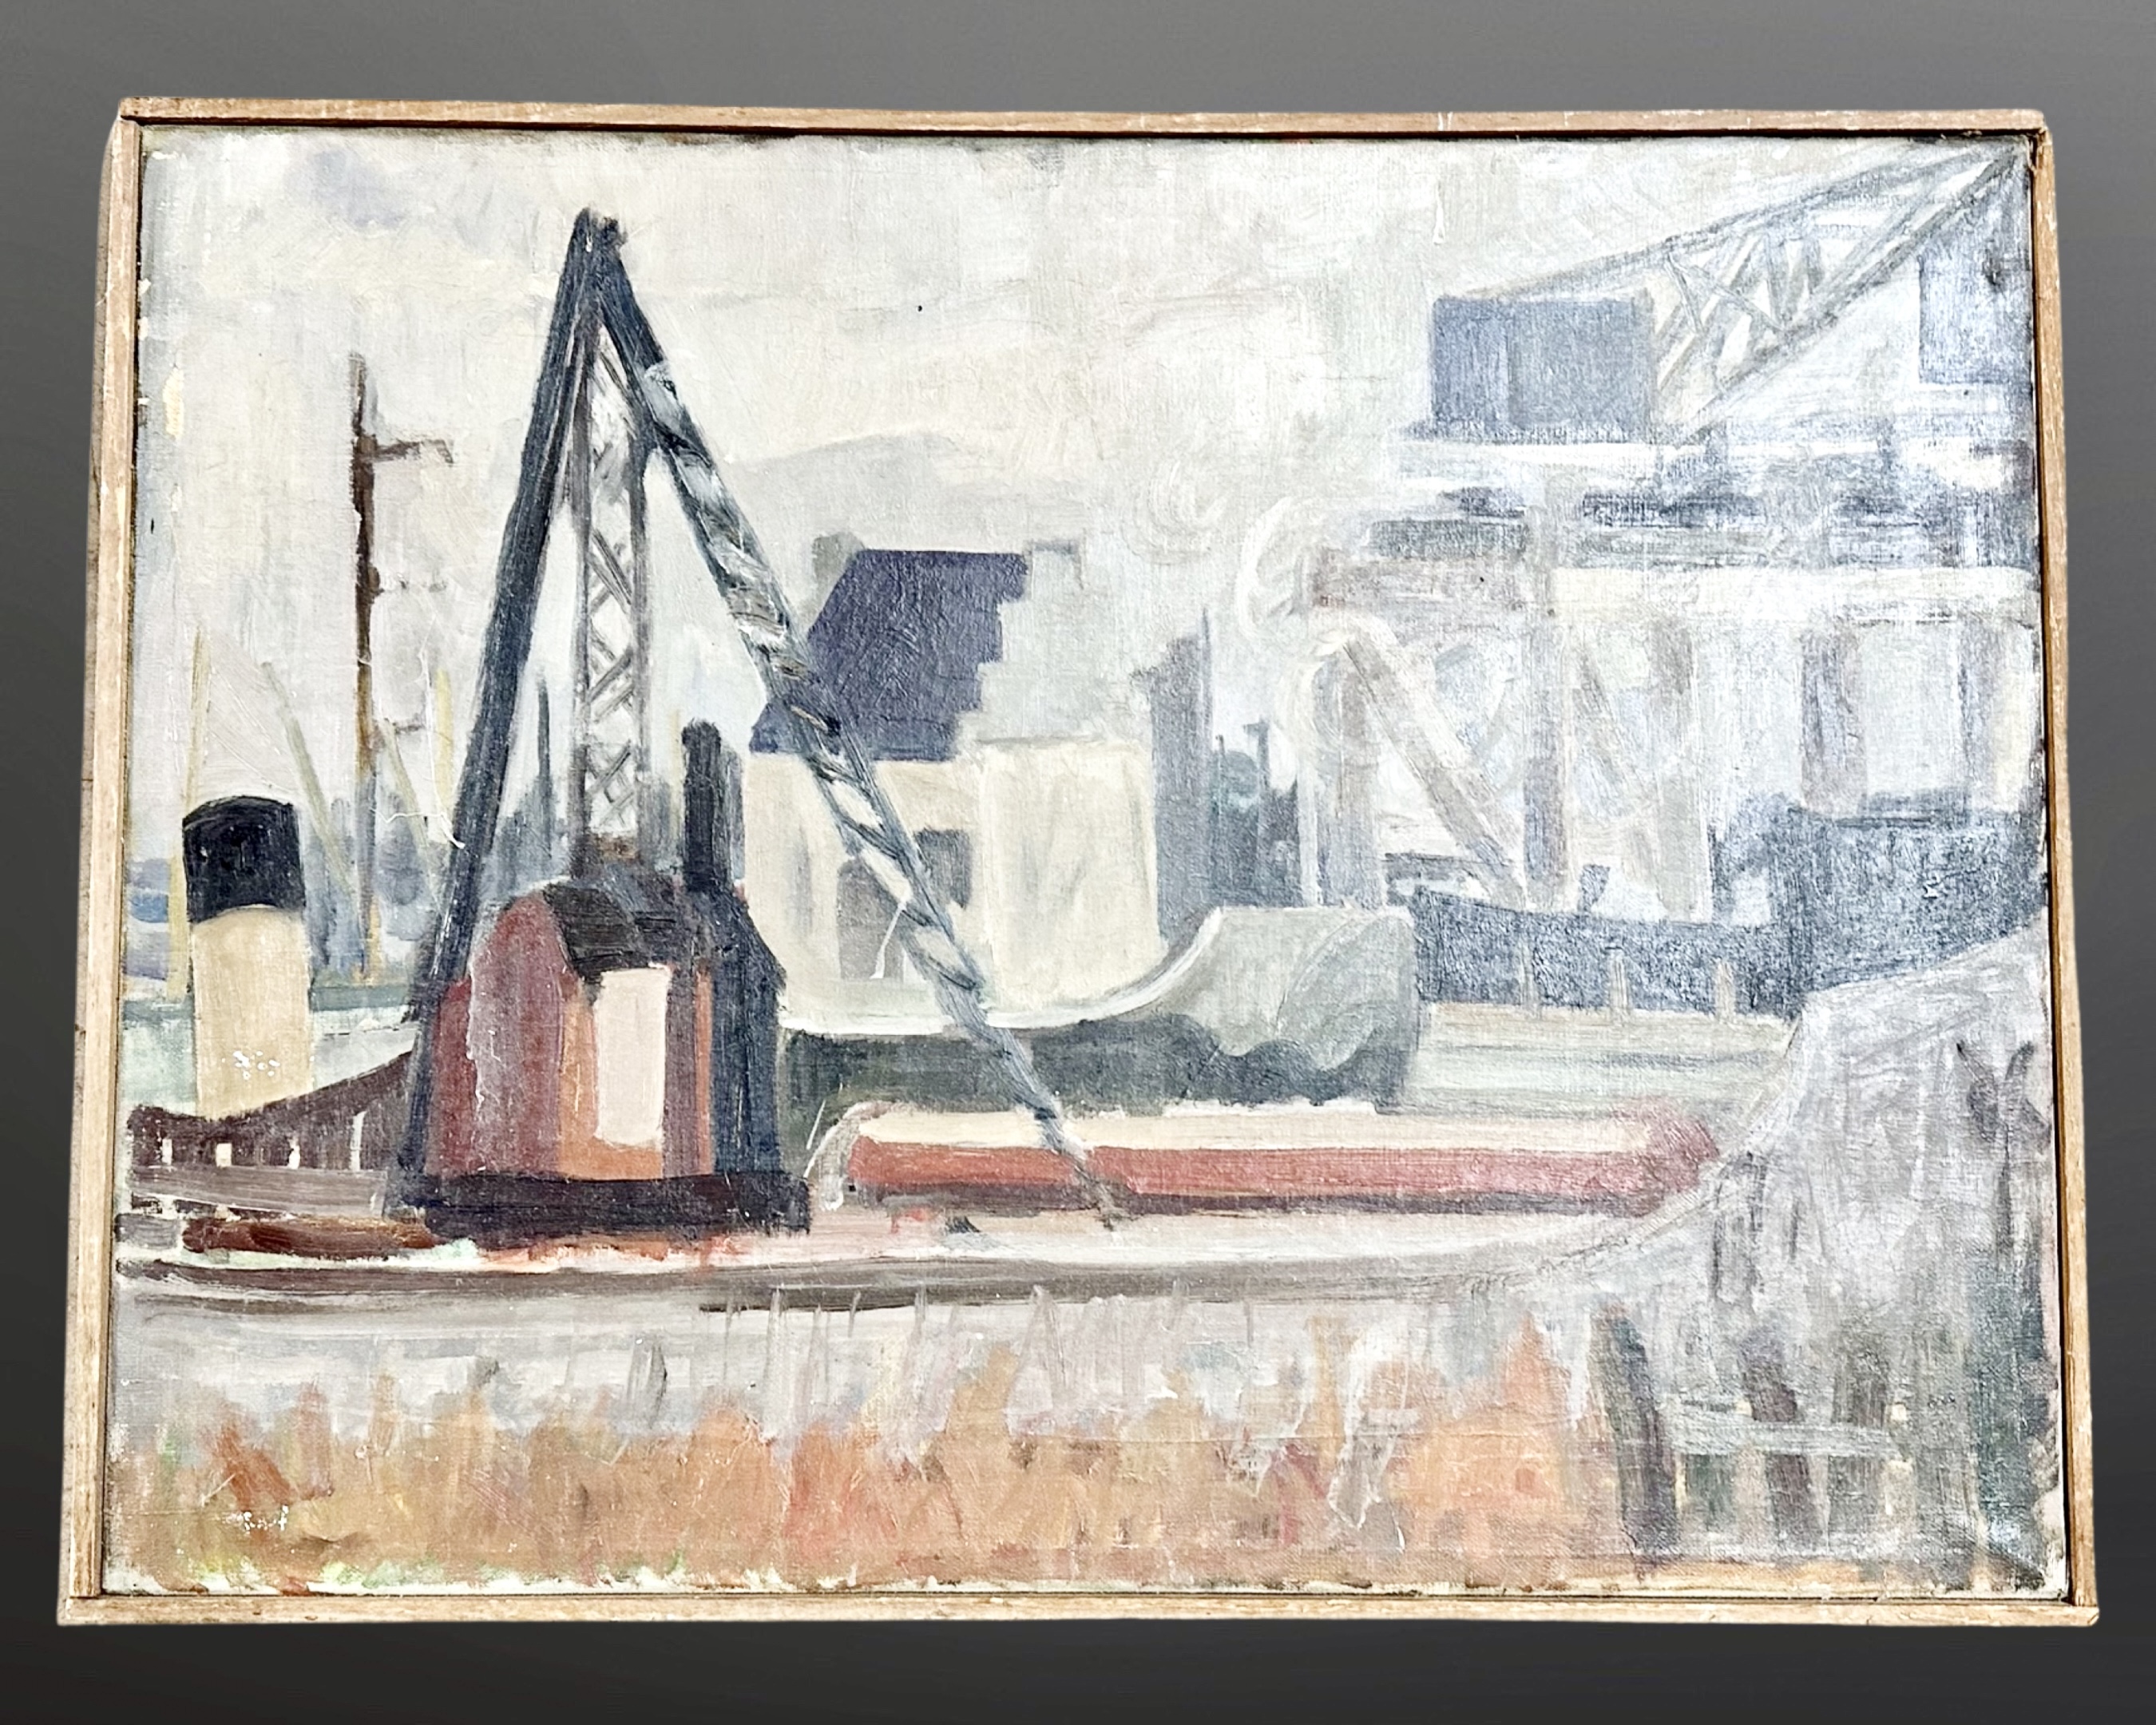 Twentieth century Continental School: Industrial harbour, oil on canvas, 62 cm x 47 cm, framed.